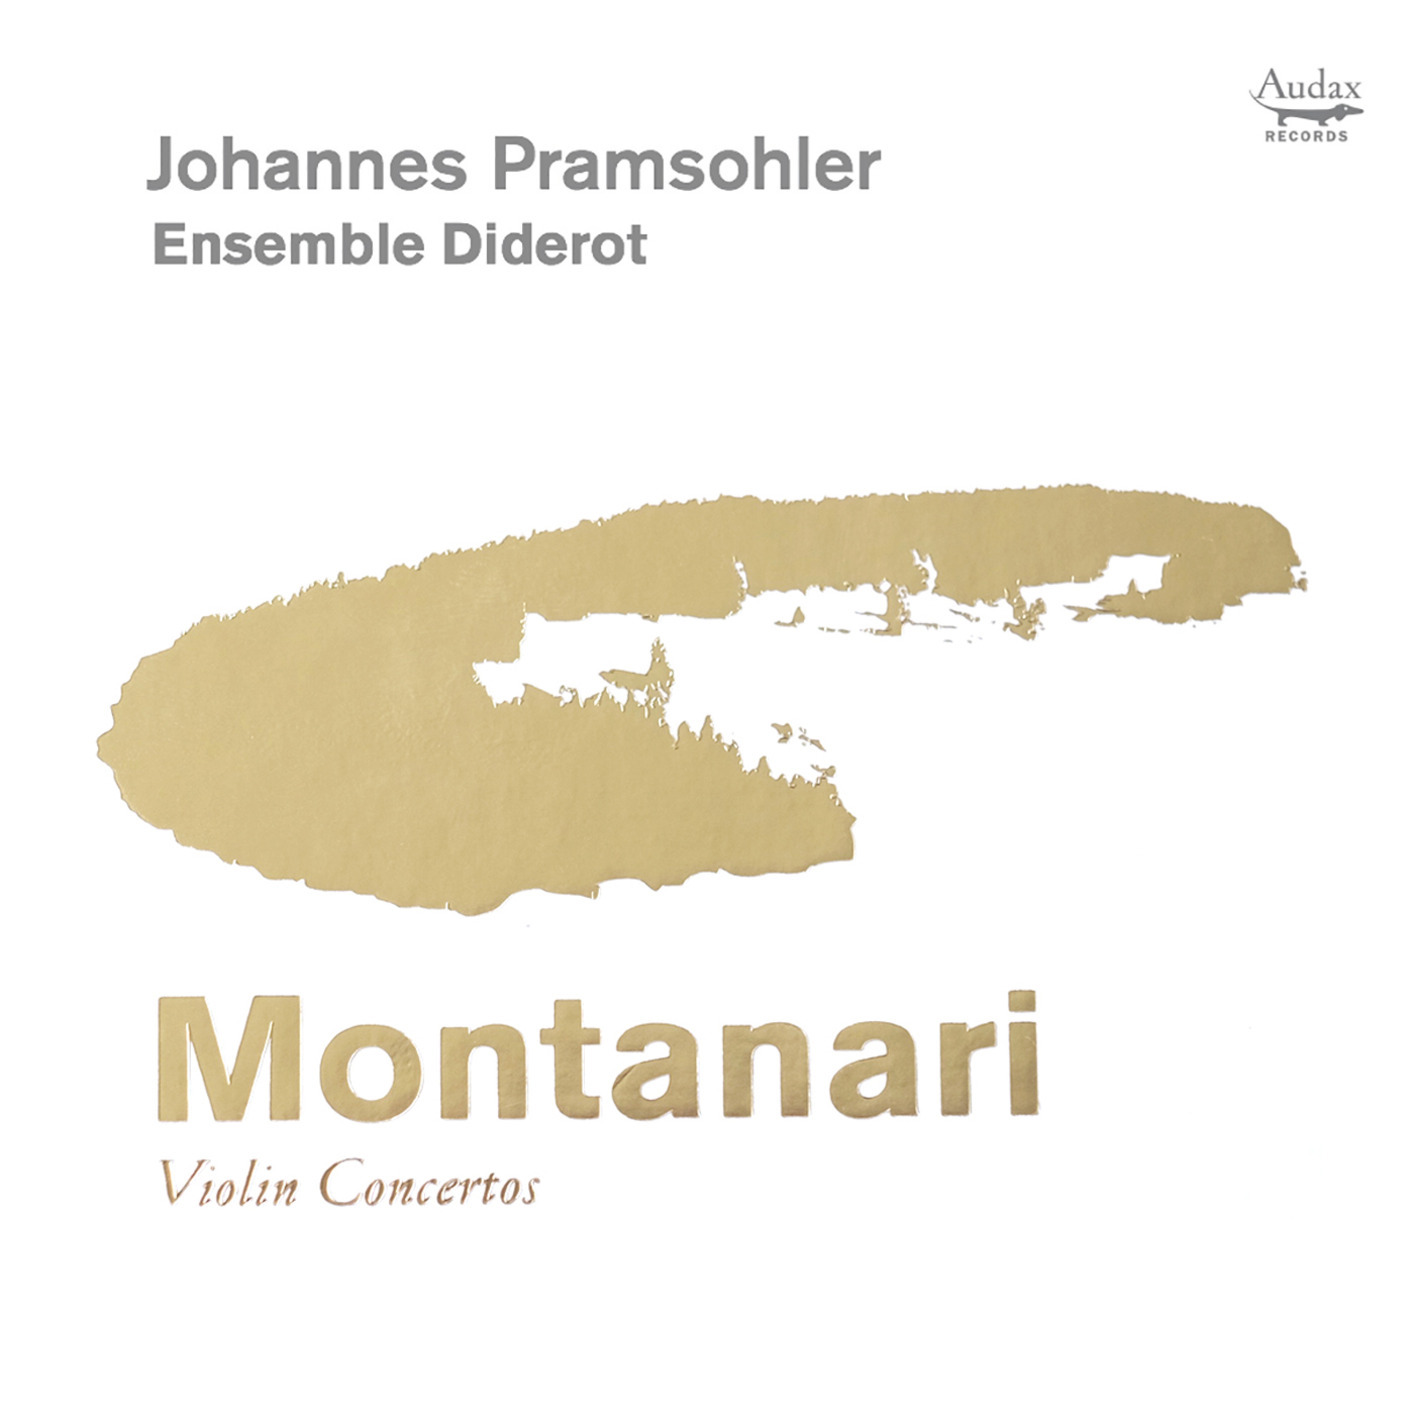 Johannes Pramsohler, Ensemble Diderot - Montanari: Violin Concertos (2015) [HighResAudio FLAC 24bit/96kHz]